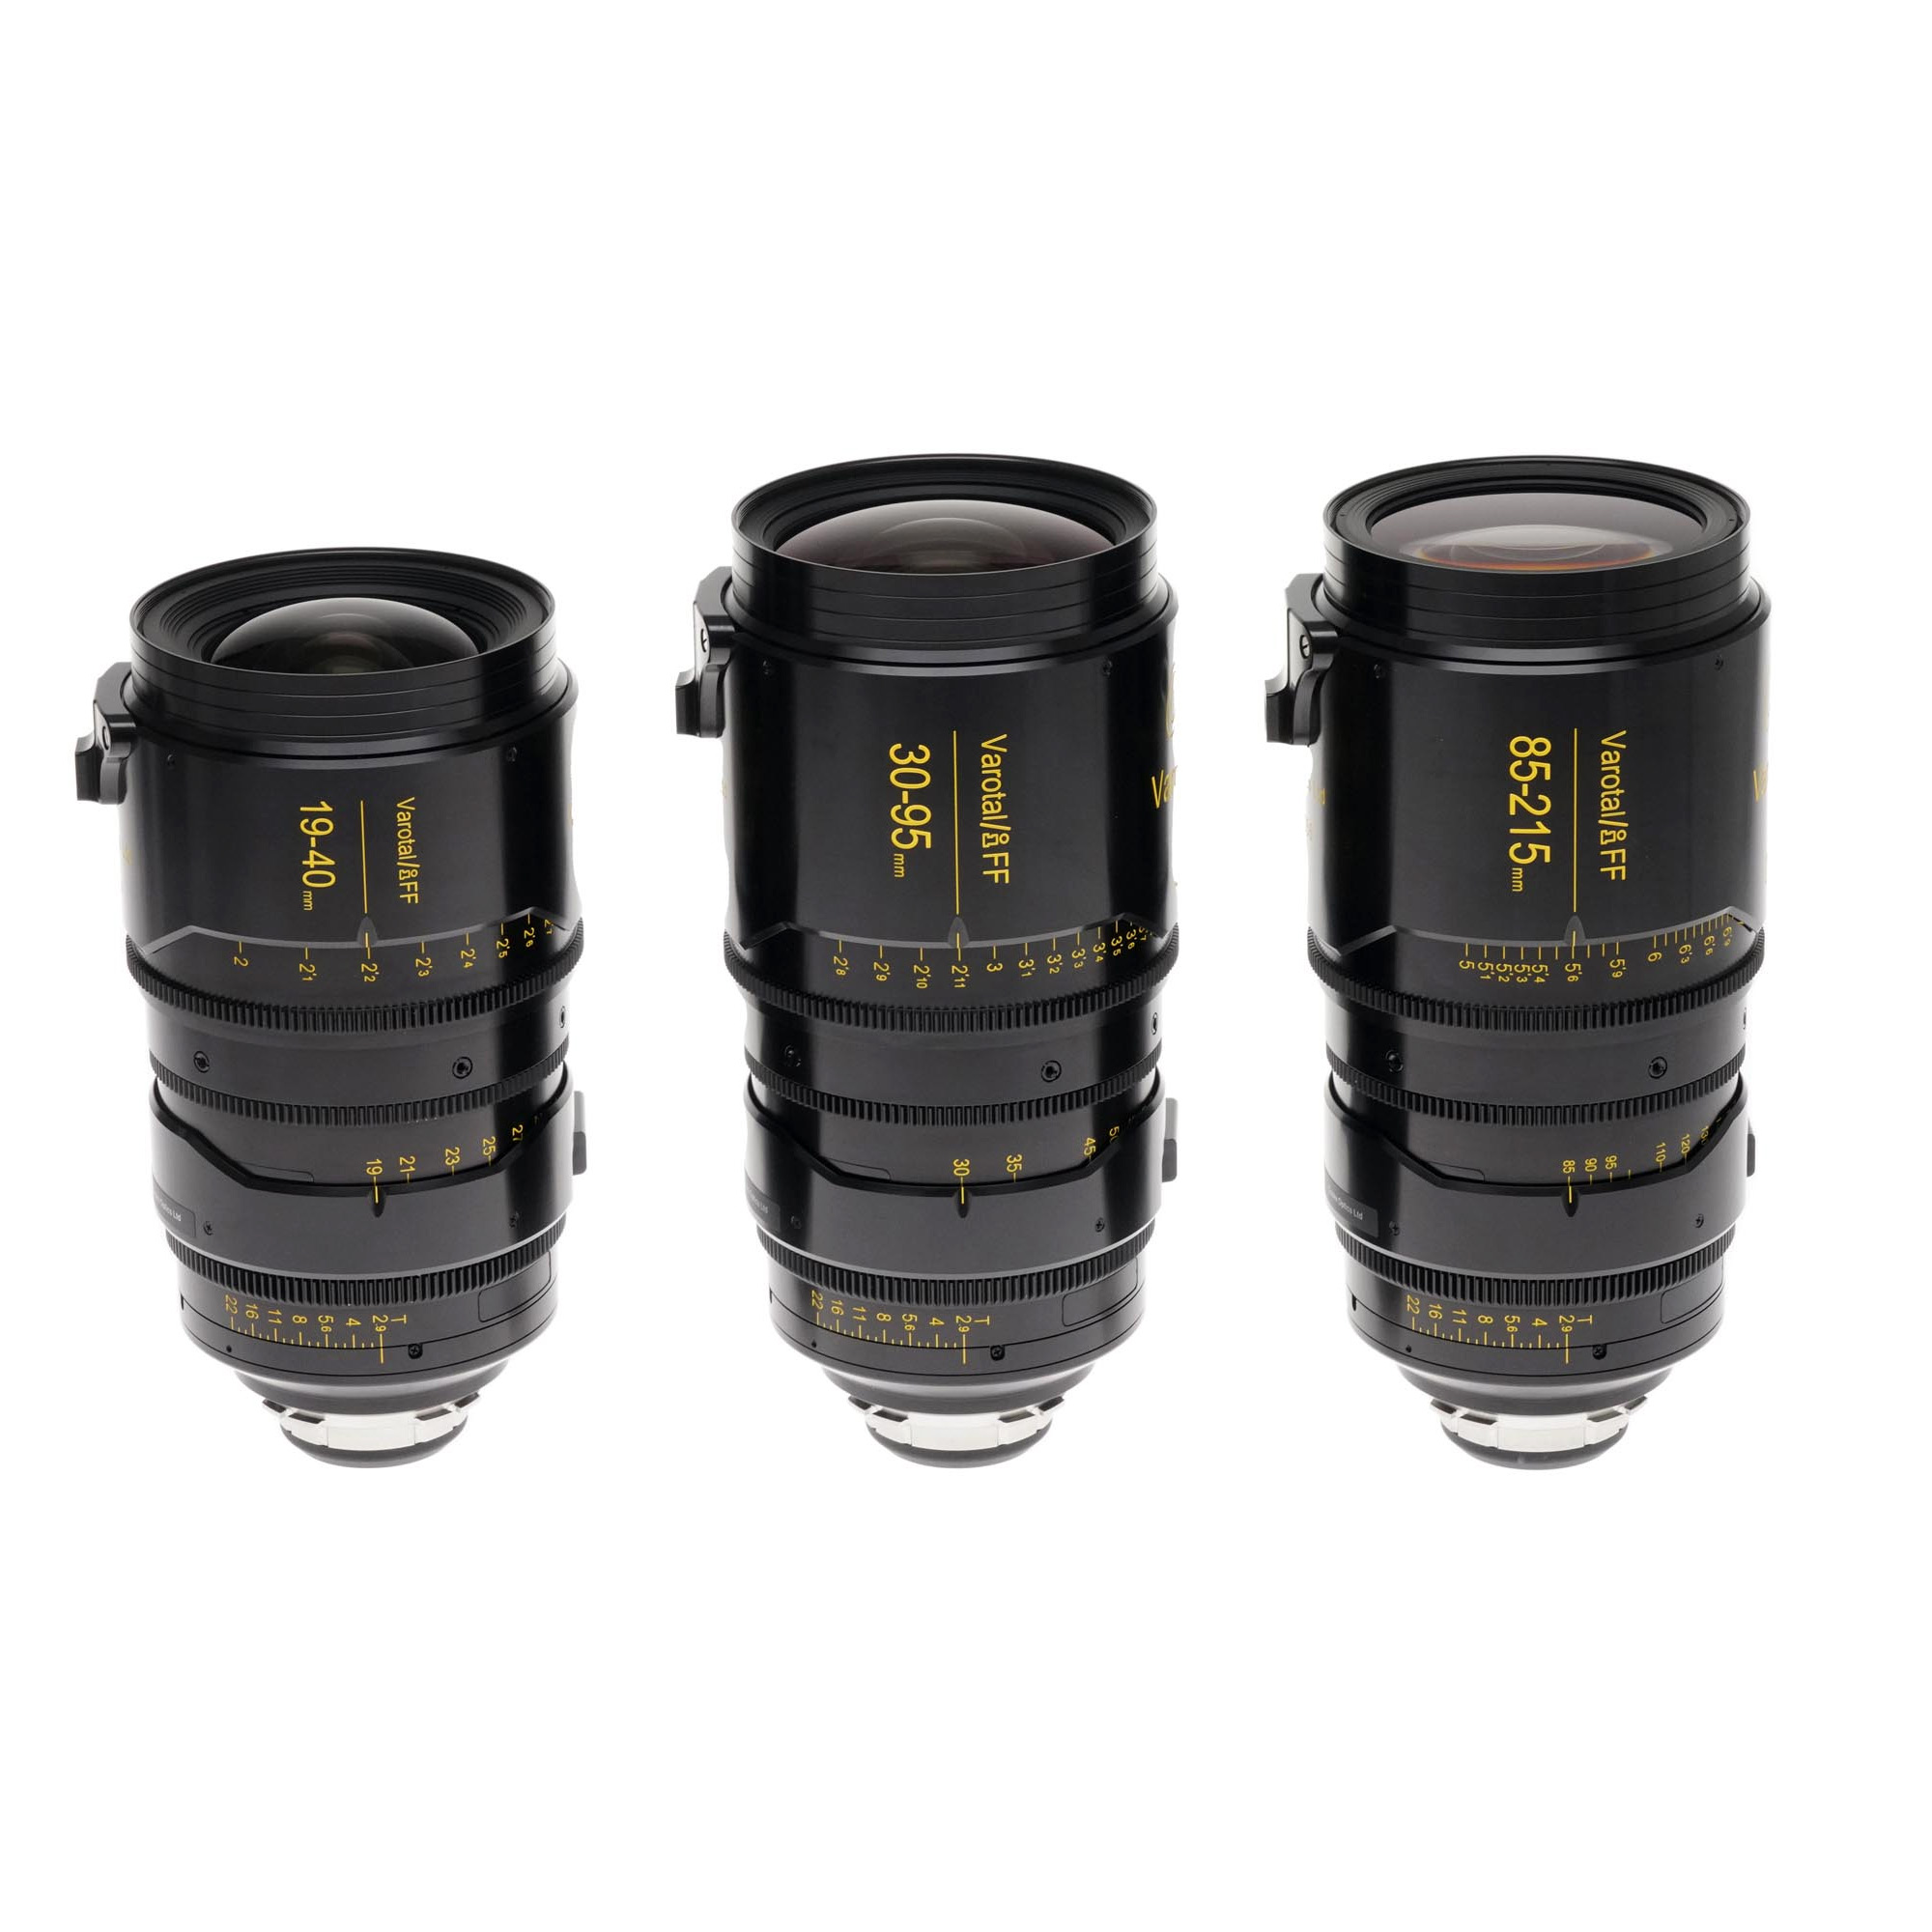 Cooke Varotal/i FF Lens Series